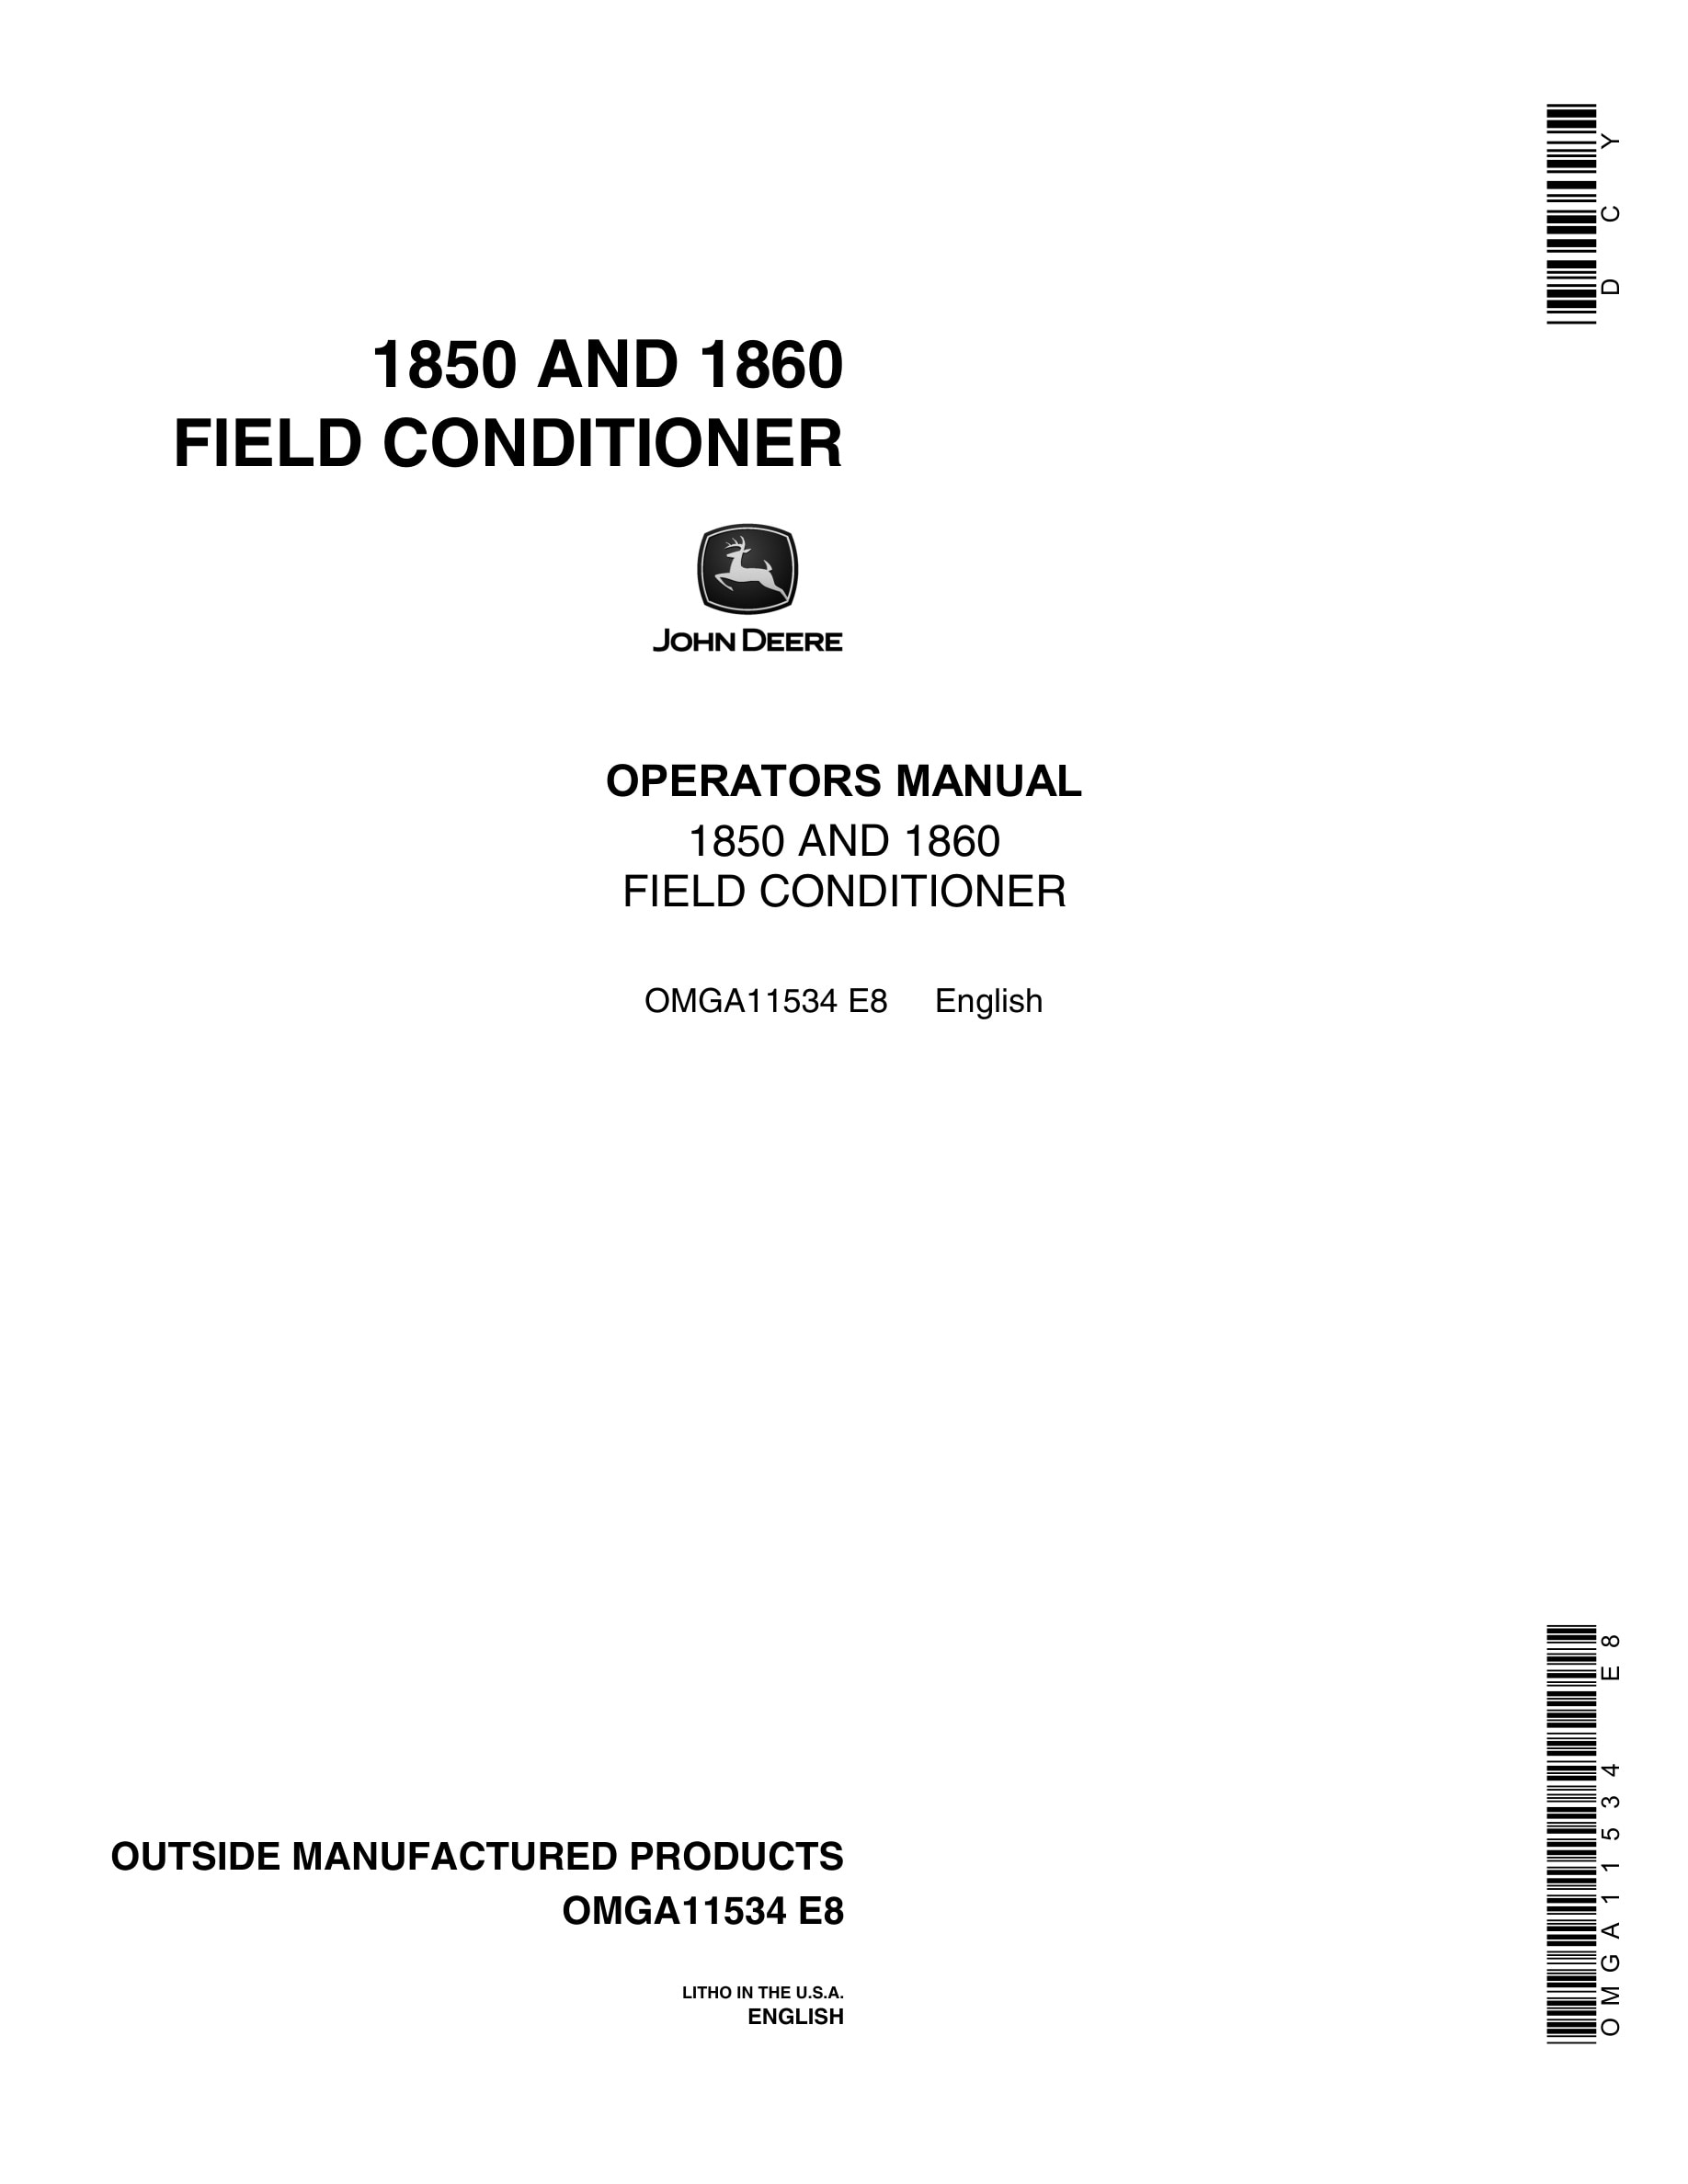 John Deere 1850 AND 1860 FIELD CONDITIONER Operator Manual OMGA11534-1